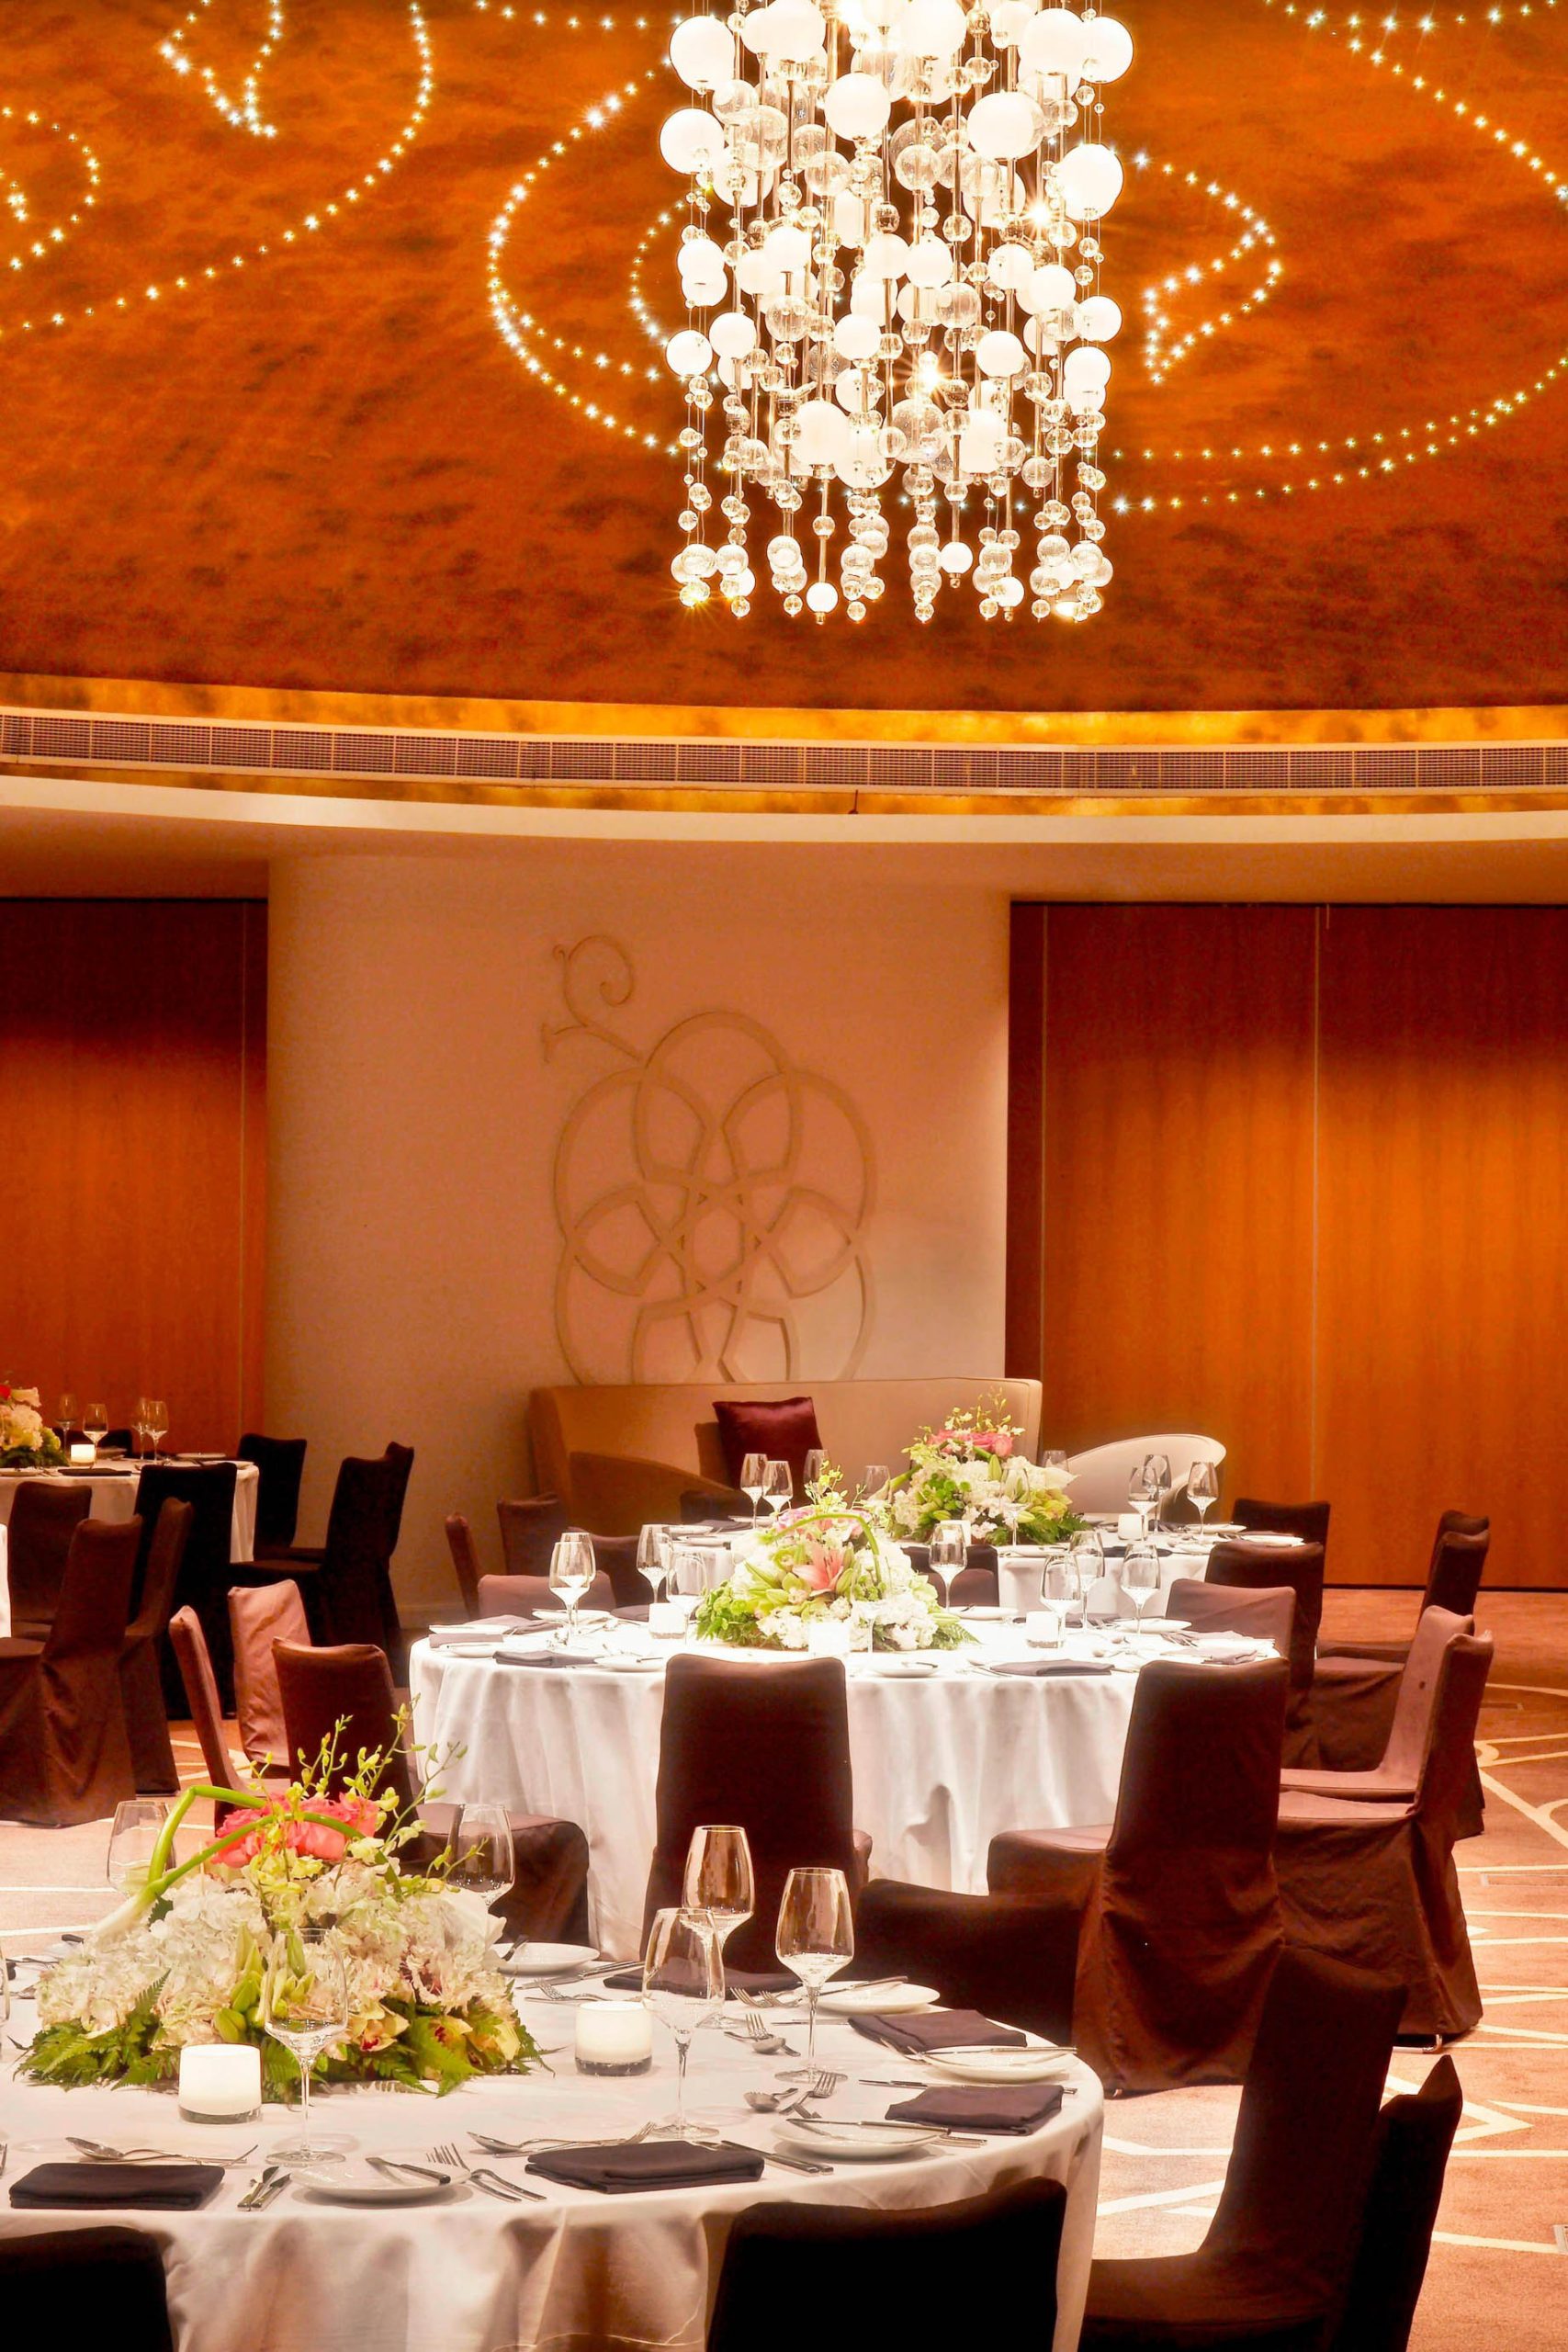 W Doha Hotel – Doha, Qatar – Great Room